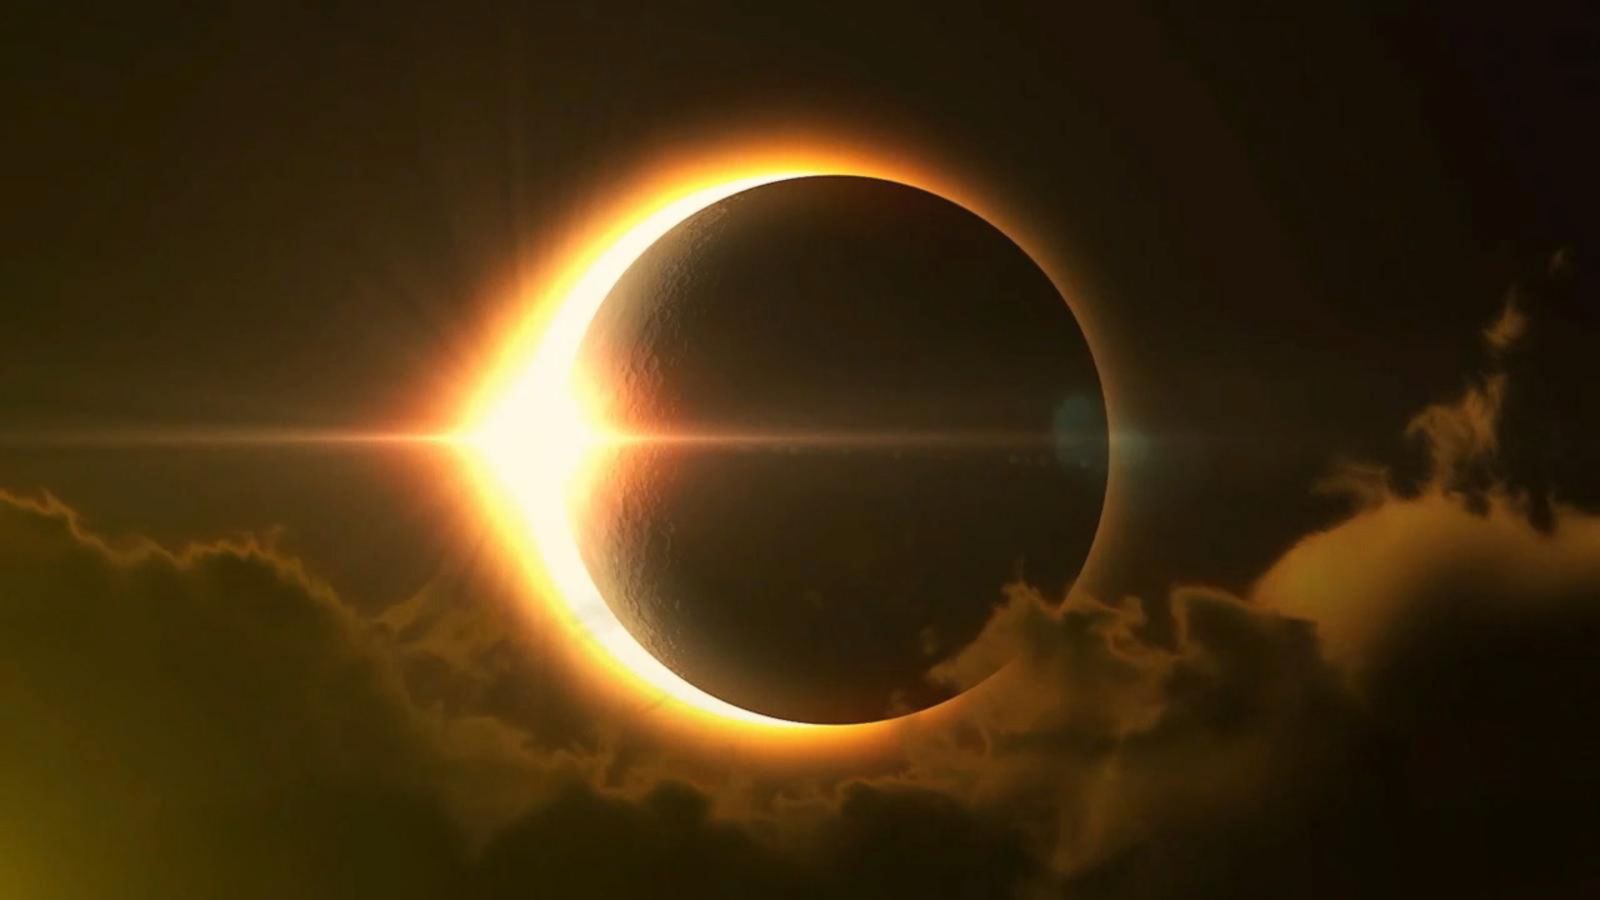 170815-vod-eclipse-promo-16x9-1600.jpg